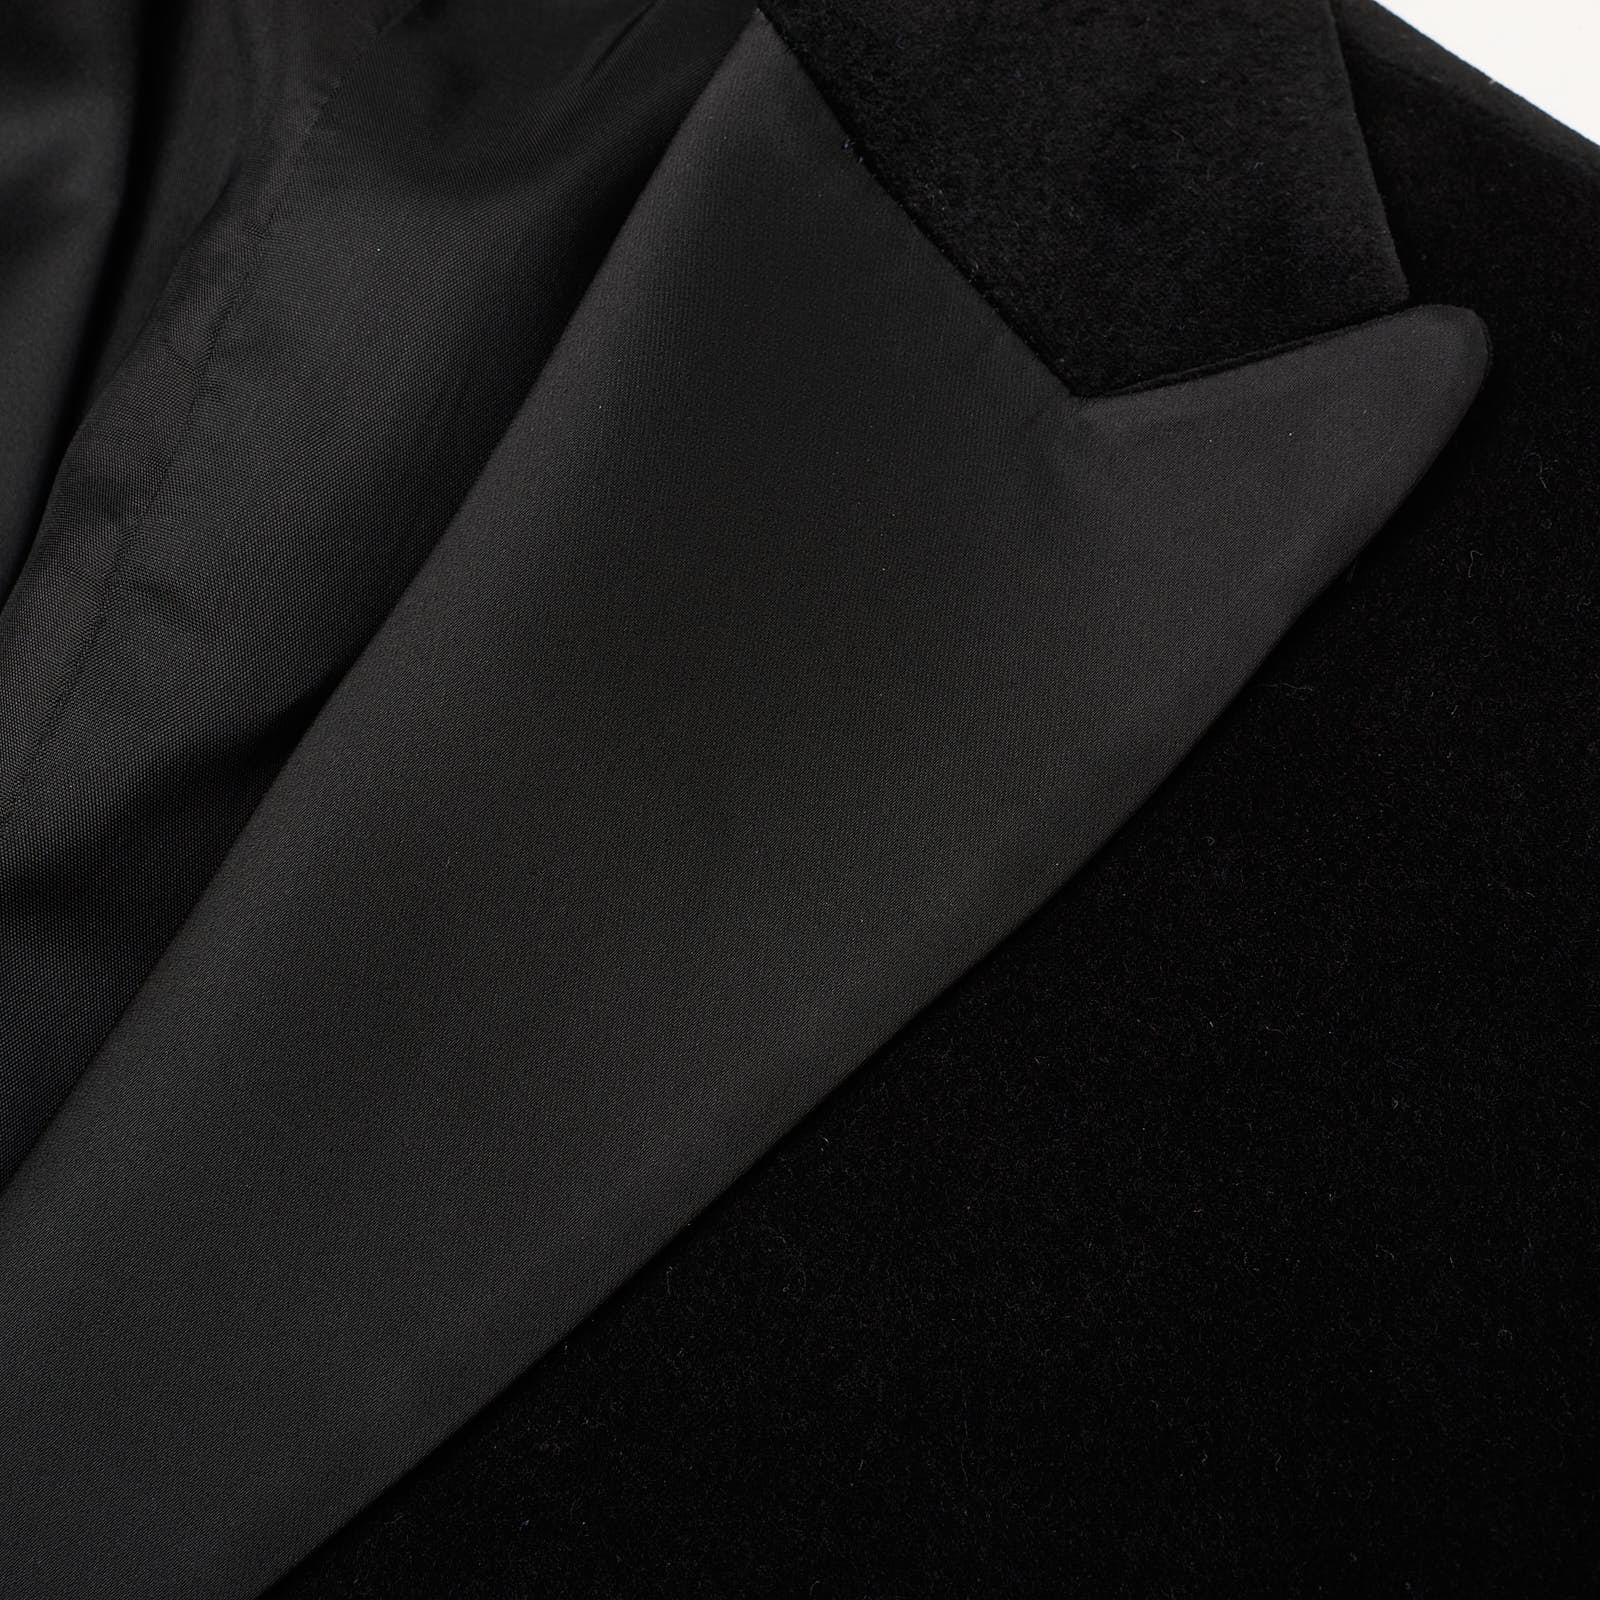 SARTORIA PARTENOPEA Black Cotton Velvet Tuxedo Peak Lapel Jacket NEW Current Model